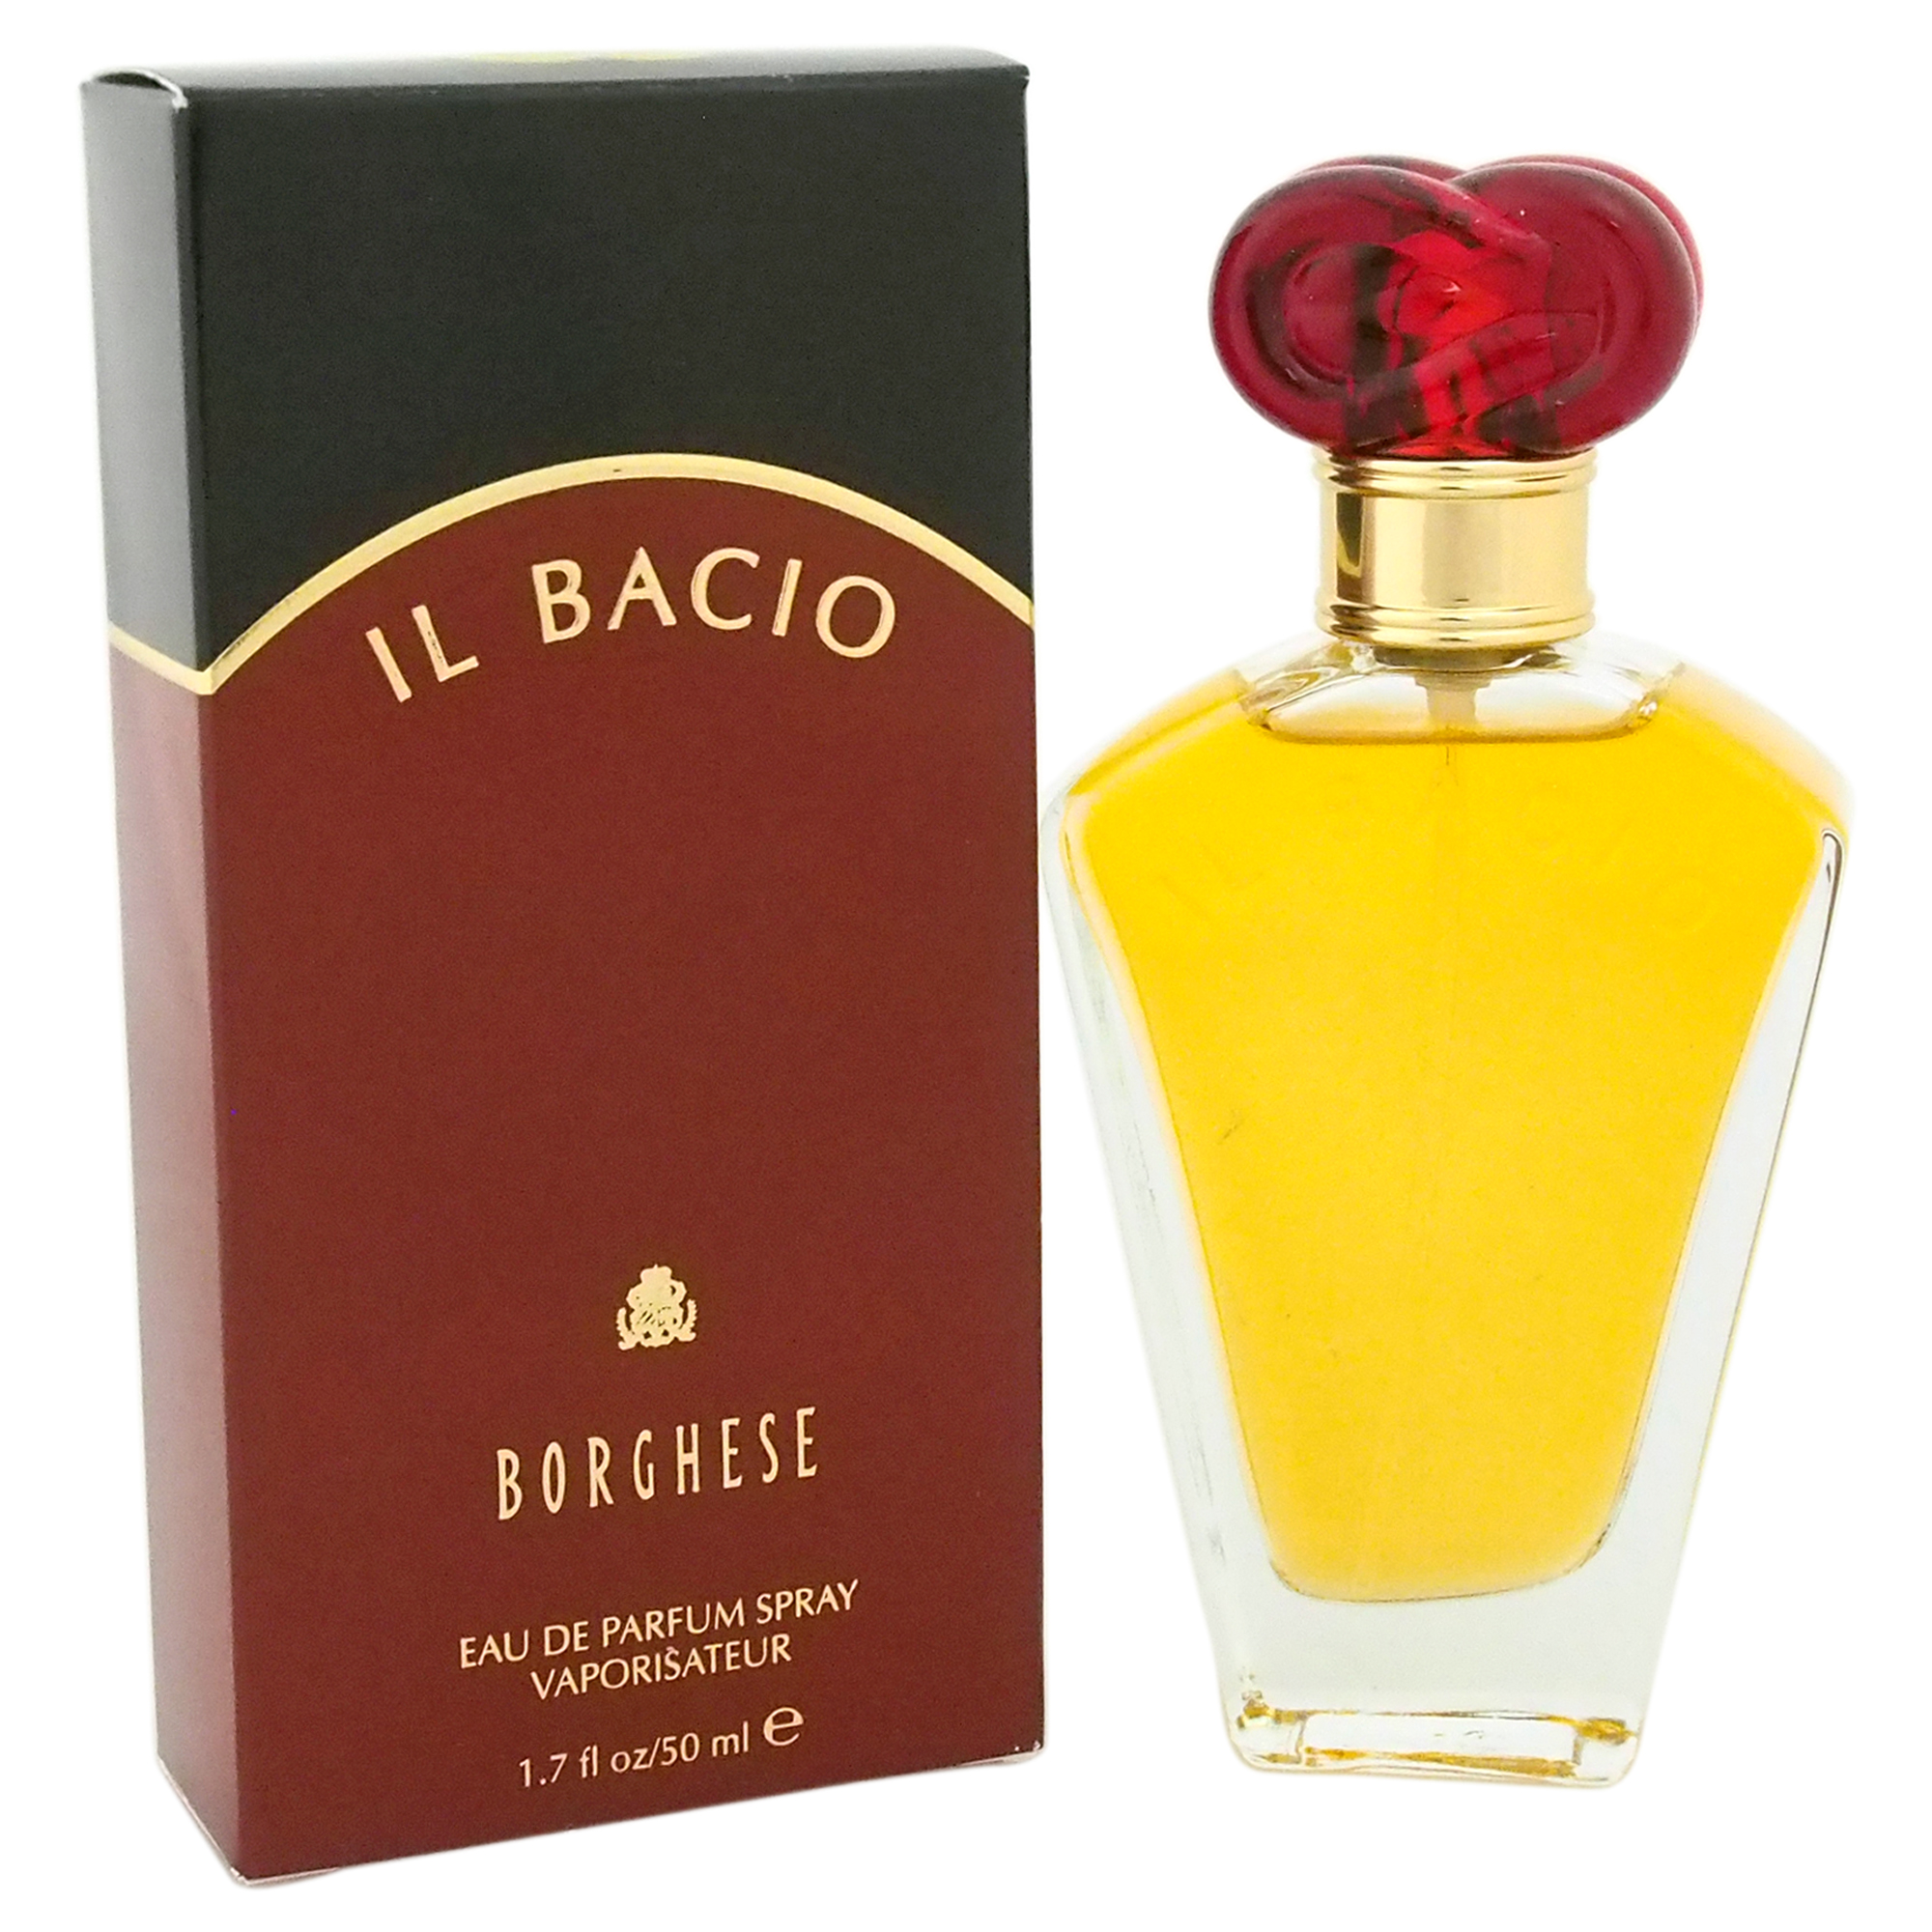 Il Bacio by Princess Marcella Borghese for Women - 1.7 oz EDP Spray